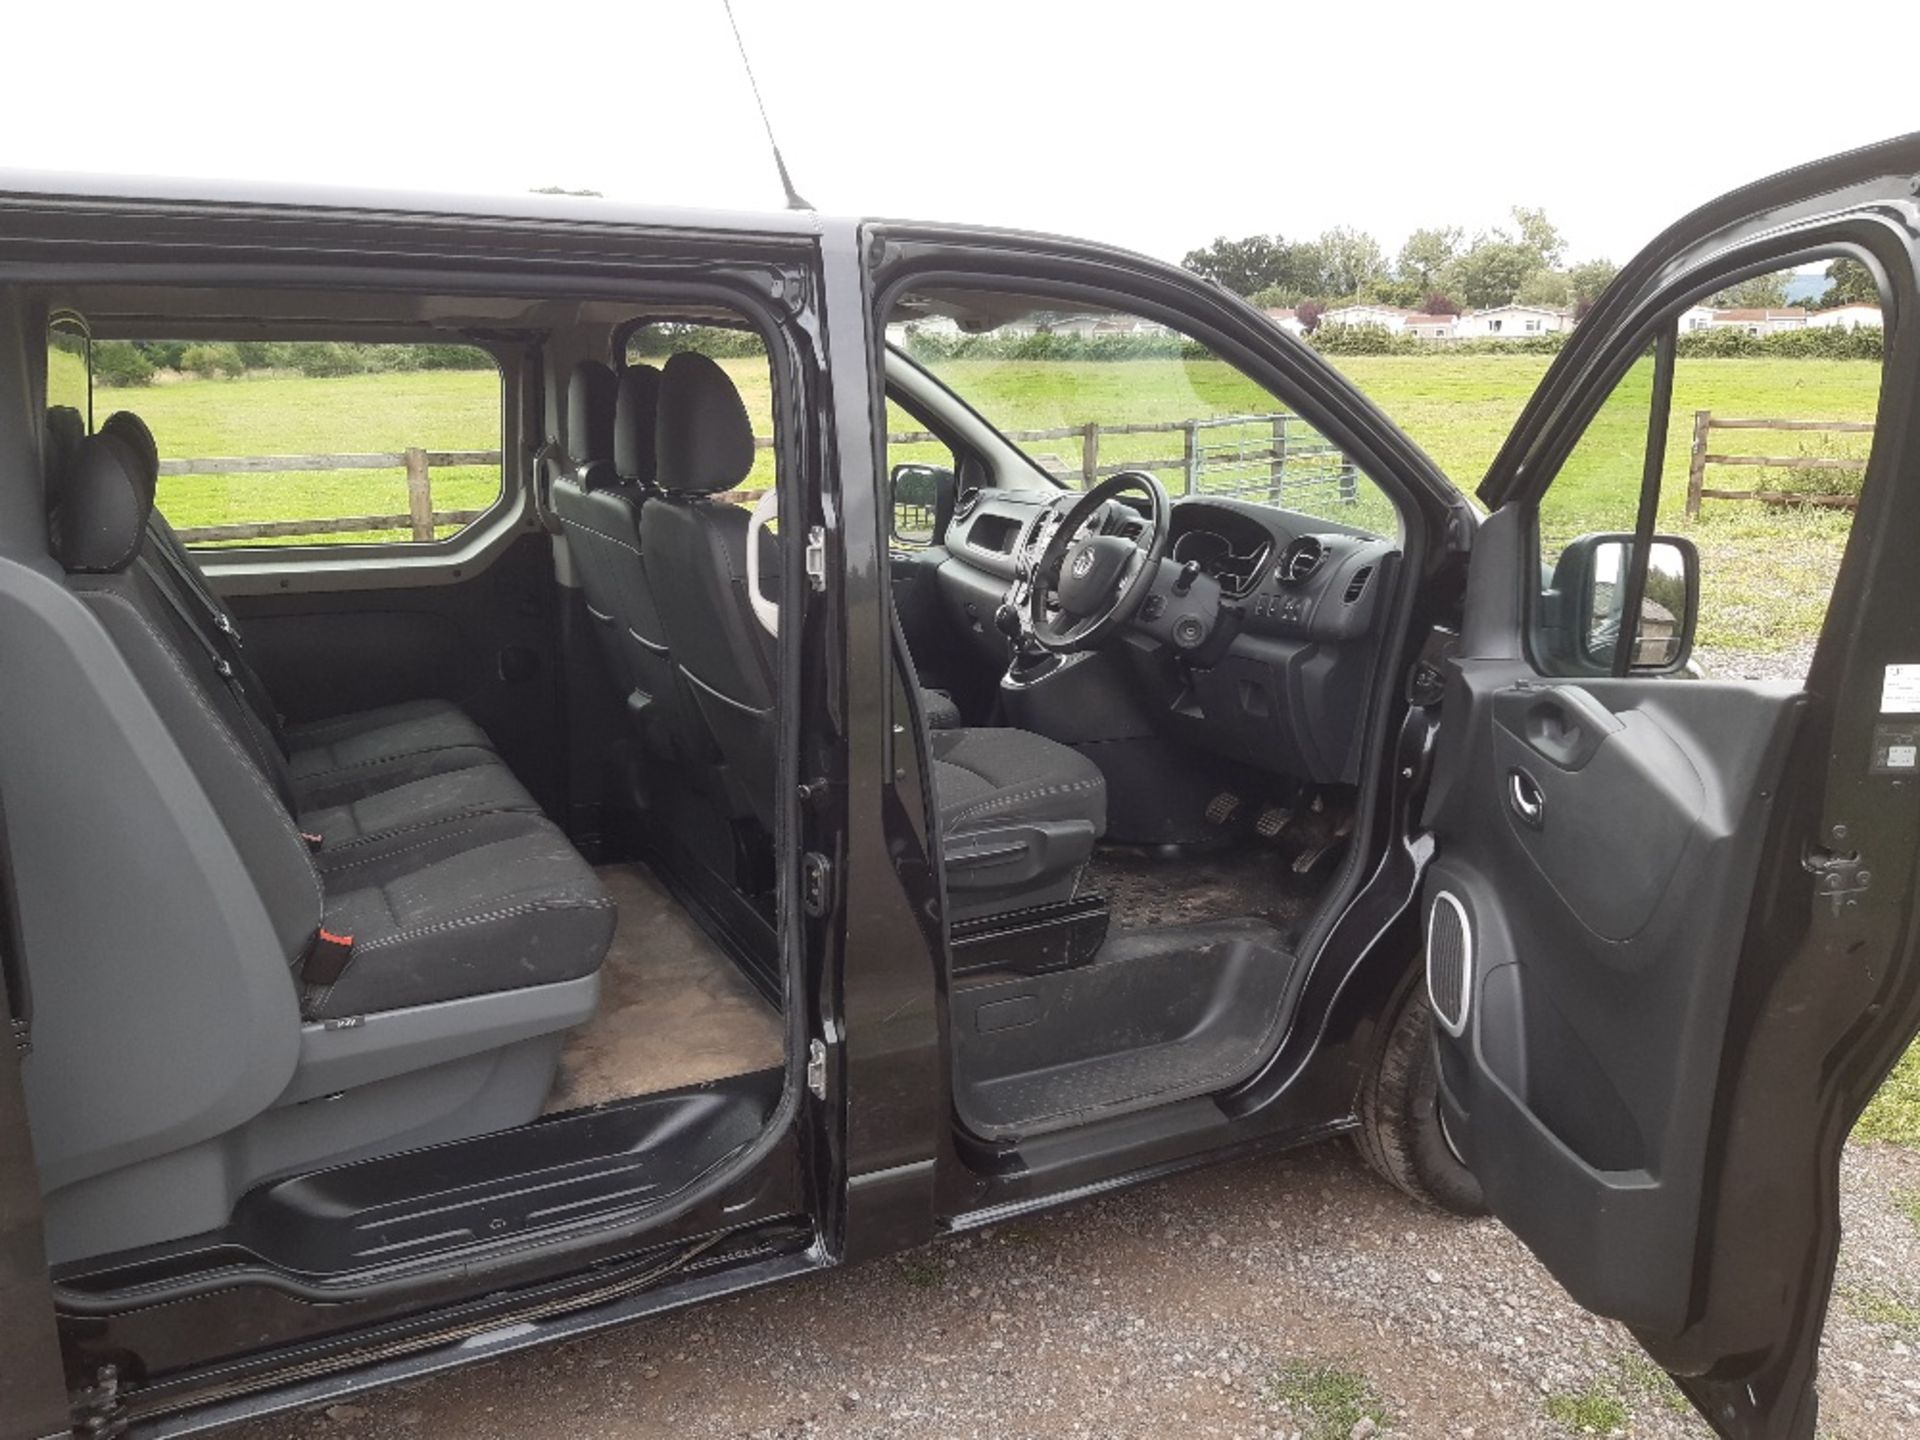 Vauxhall Vivaro CrewCab 2-axle rigid body van - Image 5 of 8